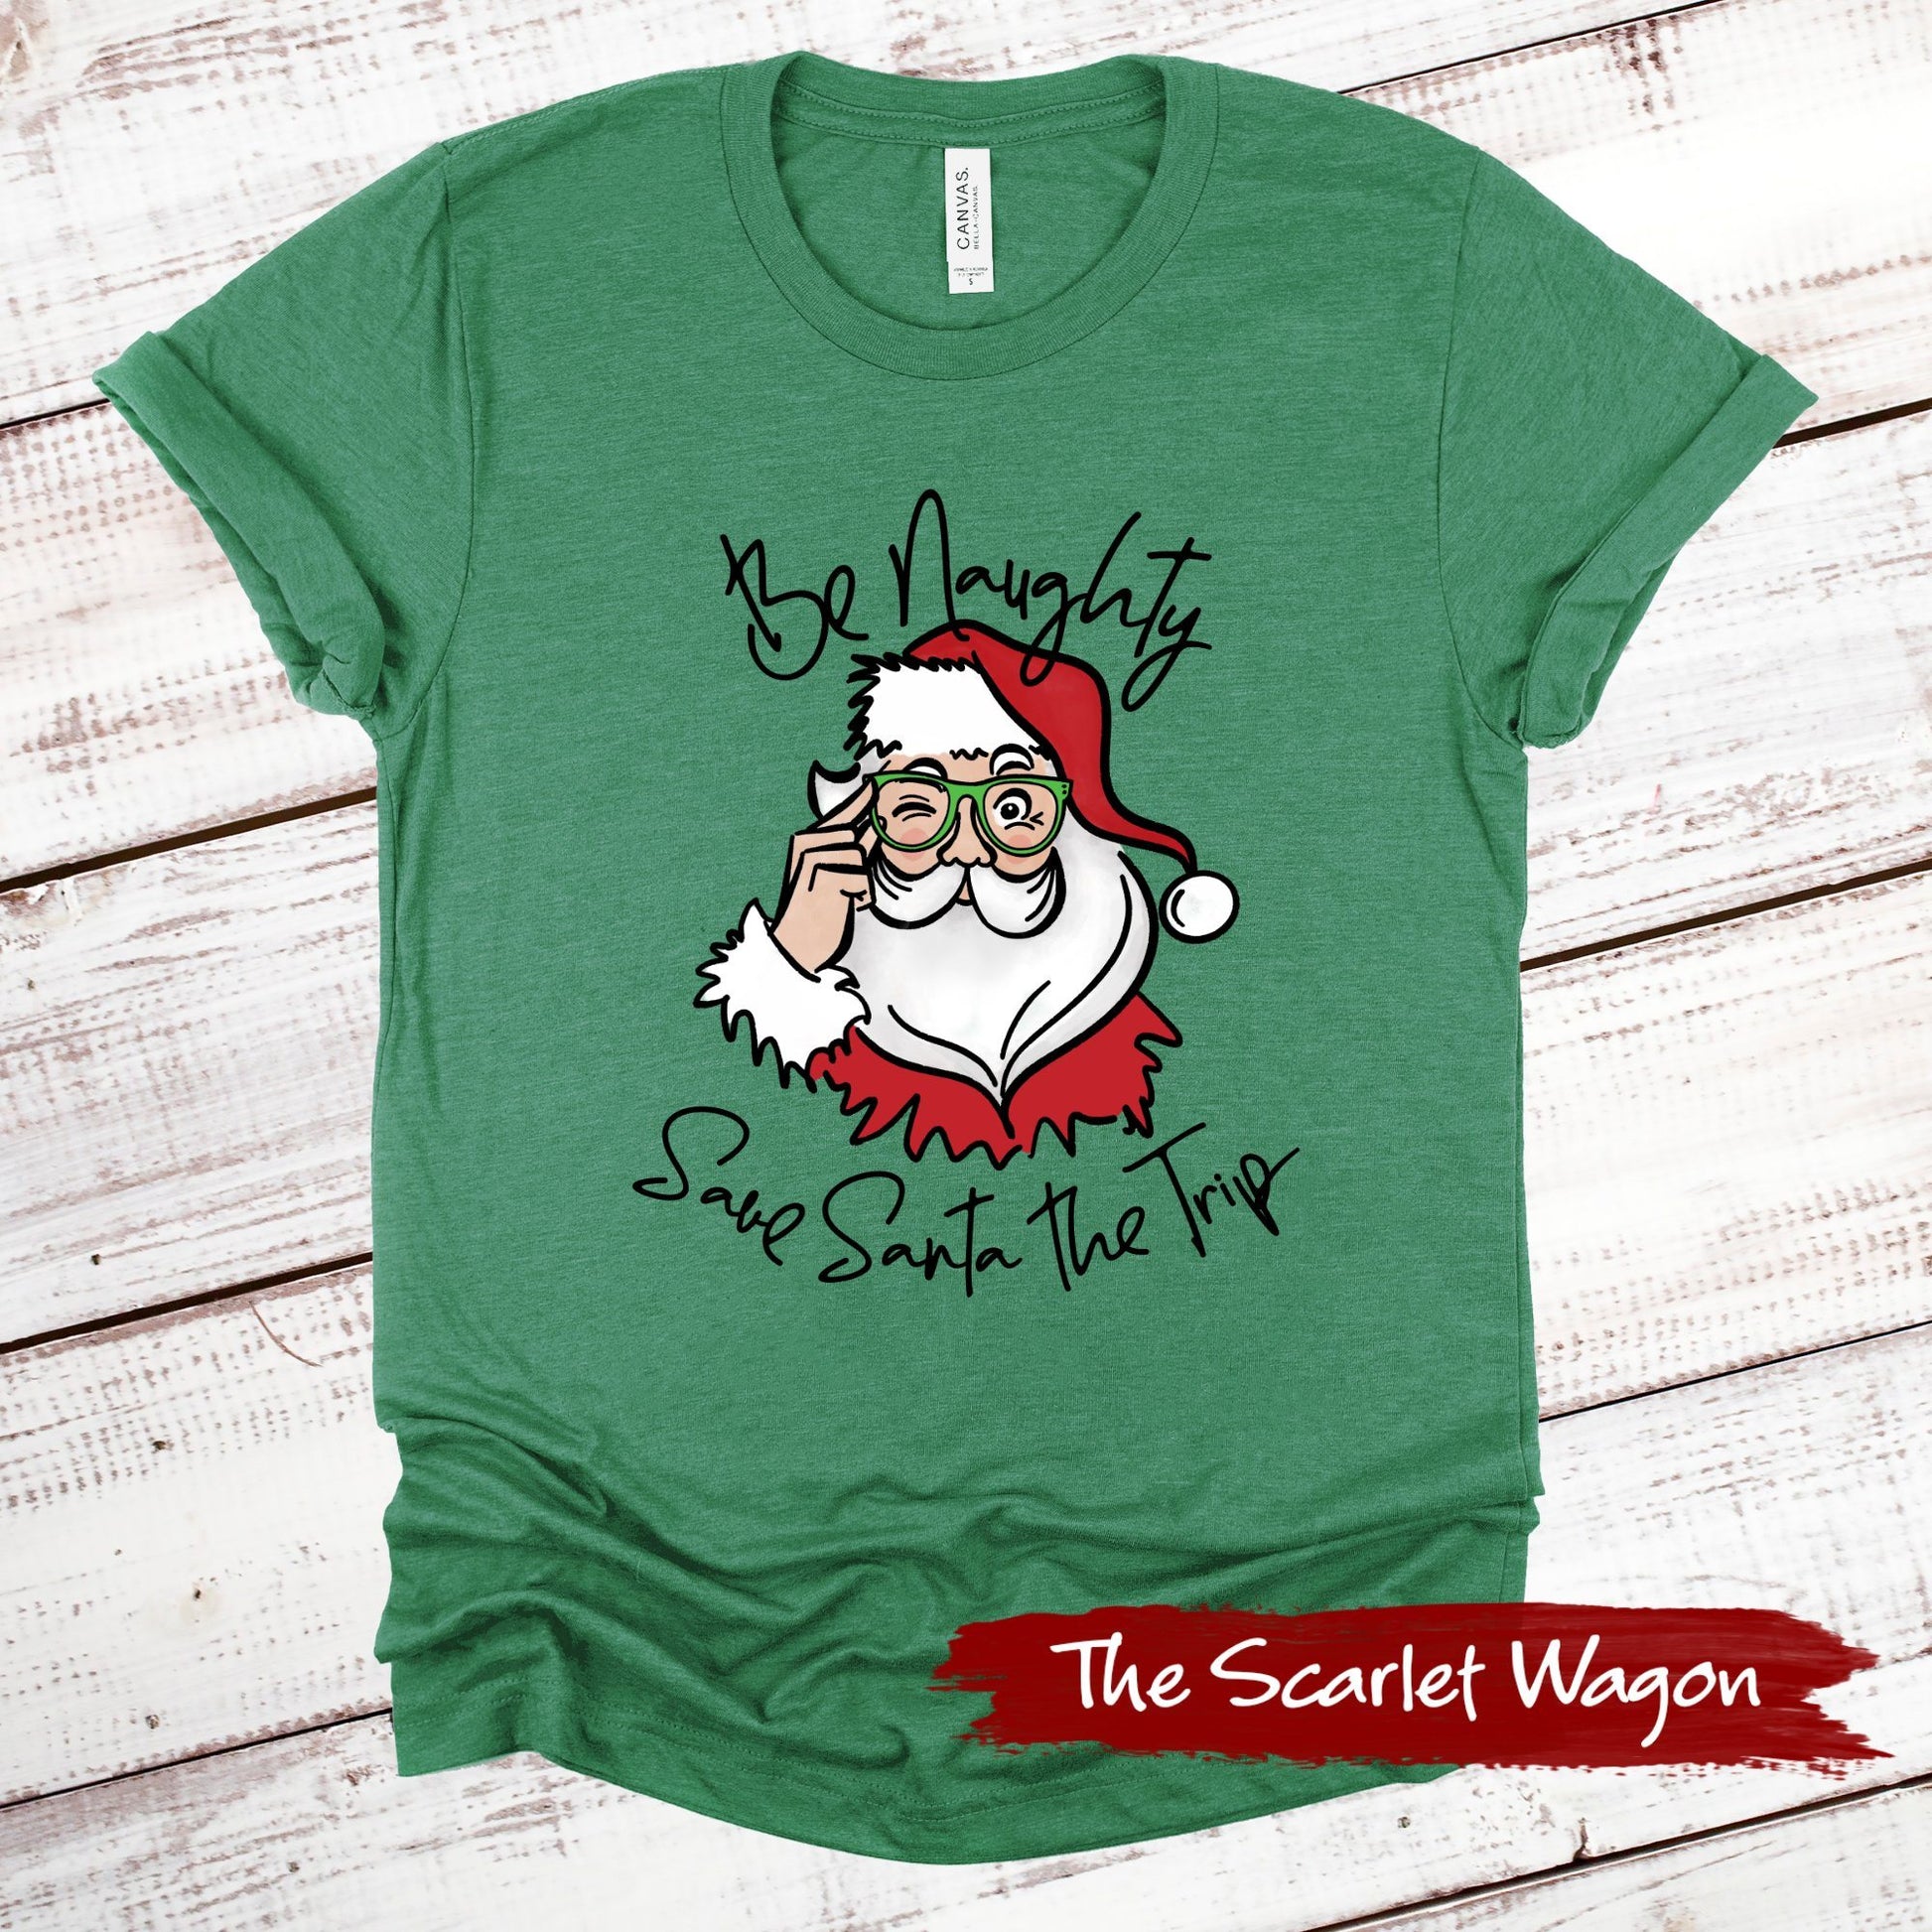 Be Naughty Save Santa the Trip Christmas Shirt Scarlet Wagon Heather Green XS 